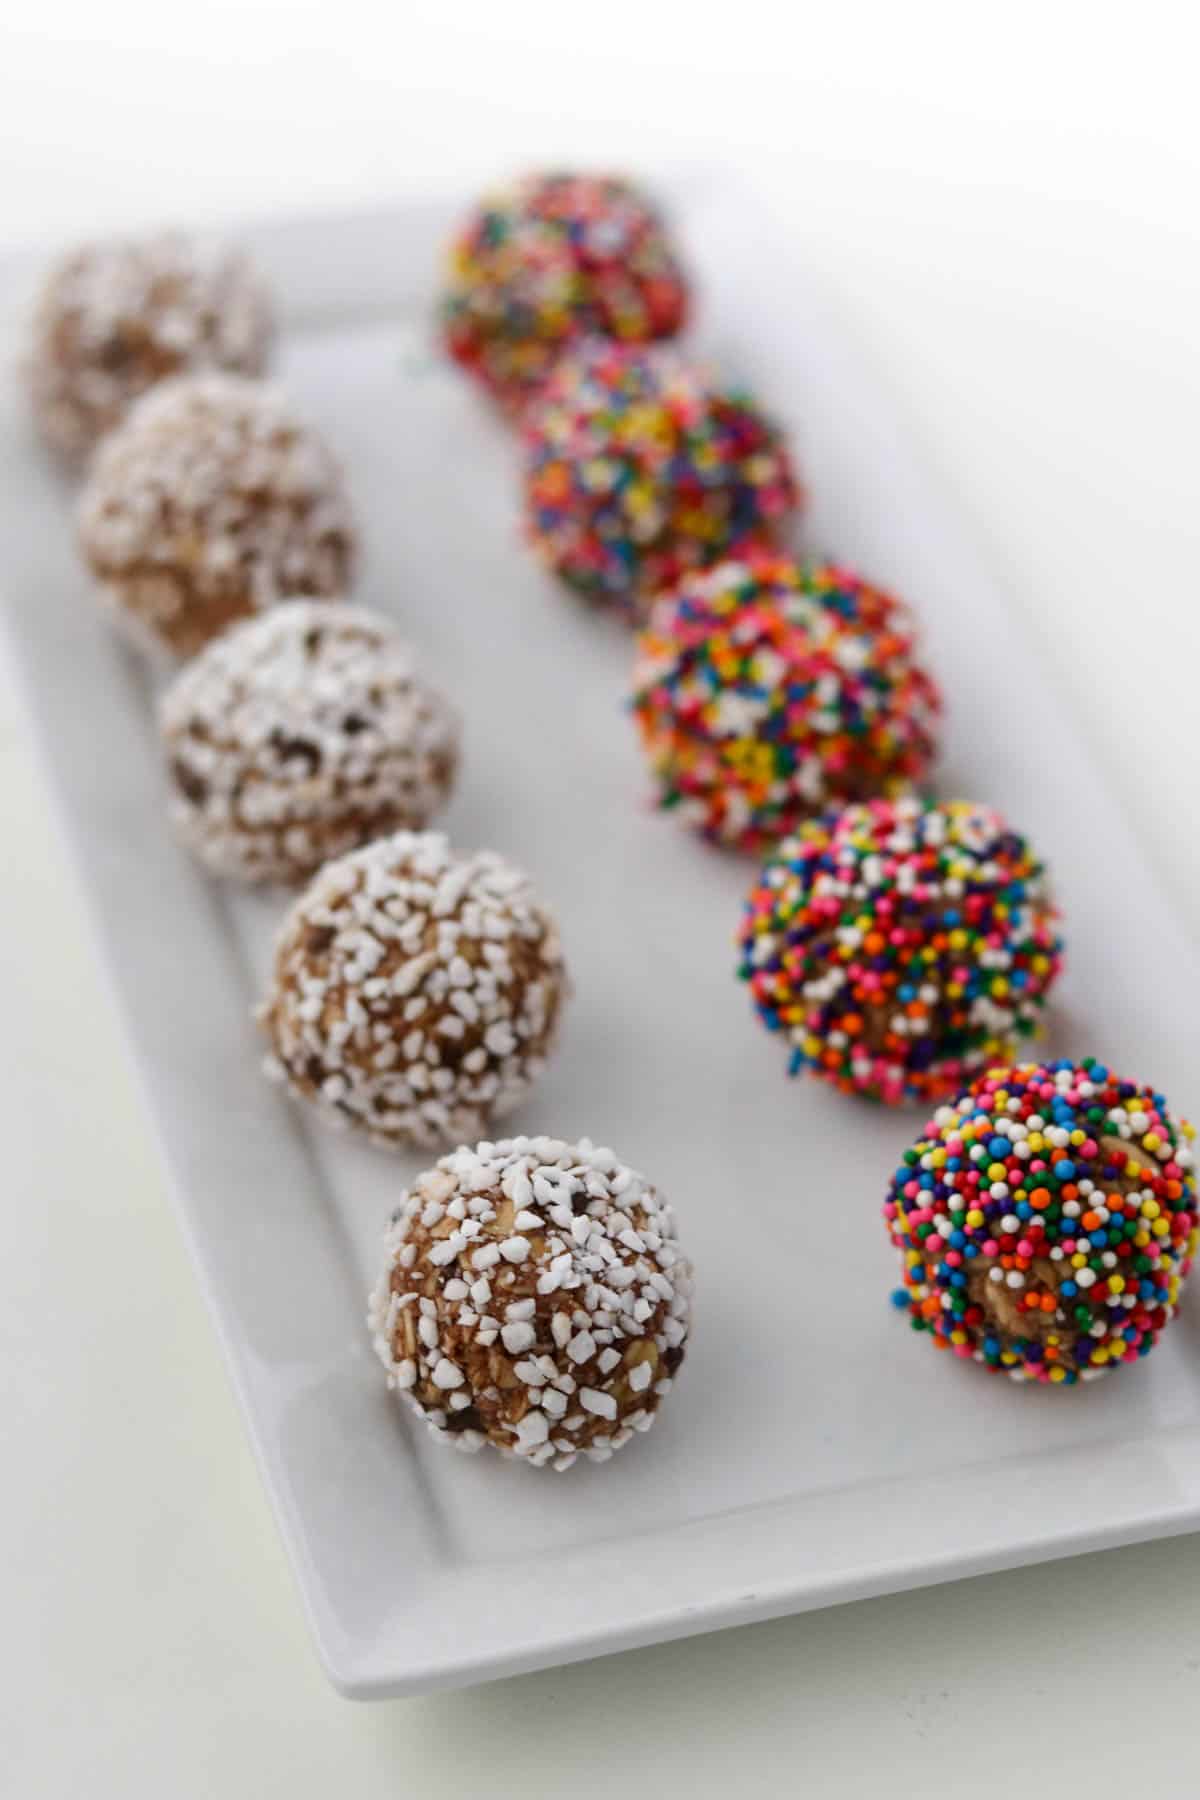 Swedish Chocolate Balls on a plate.